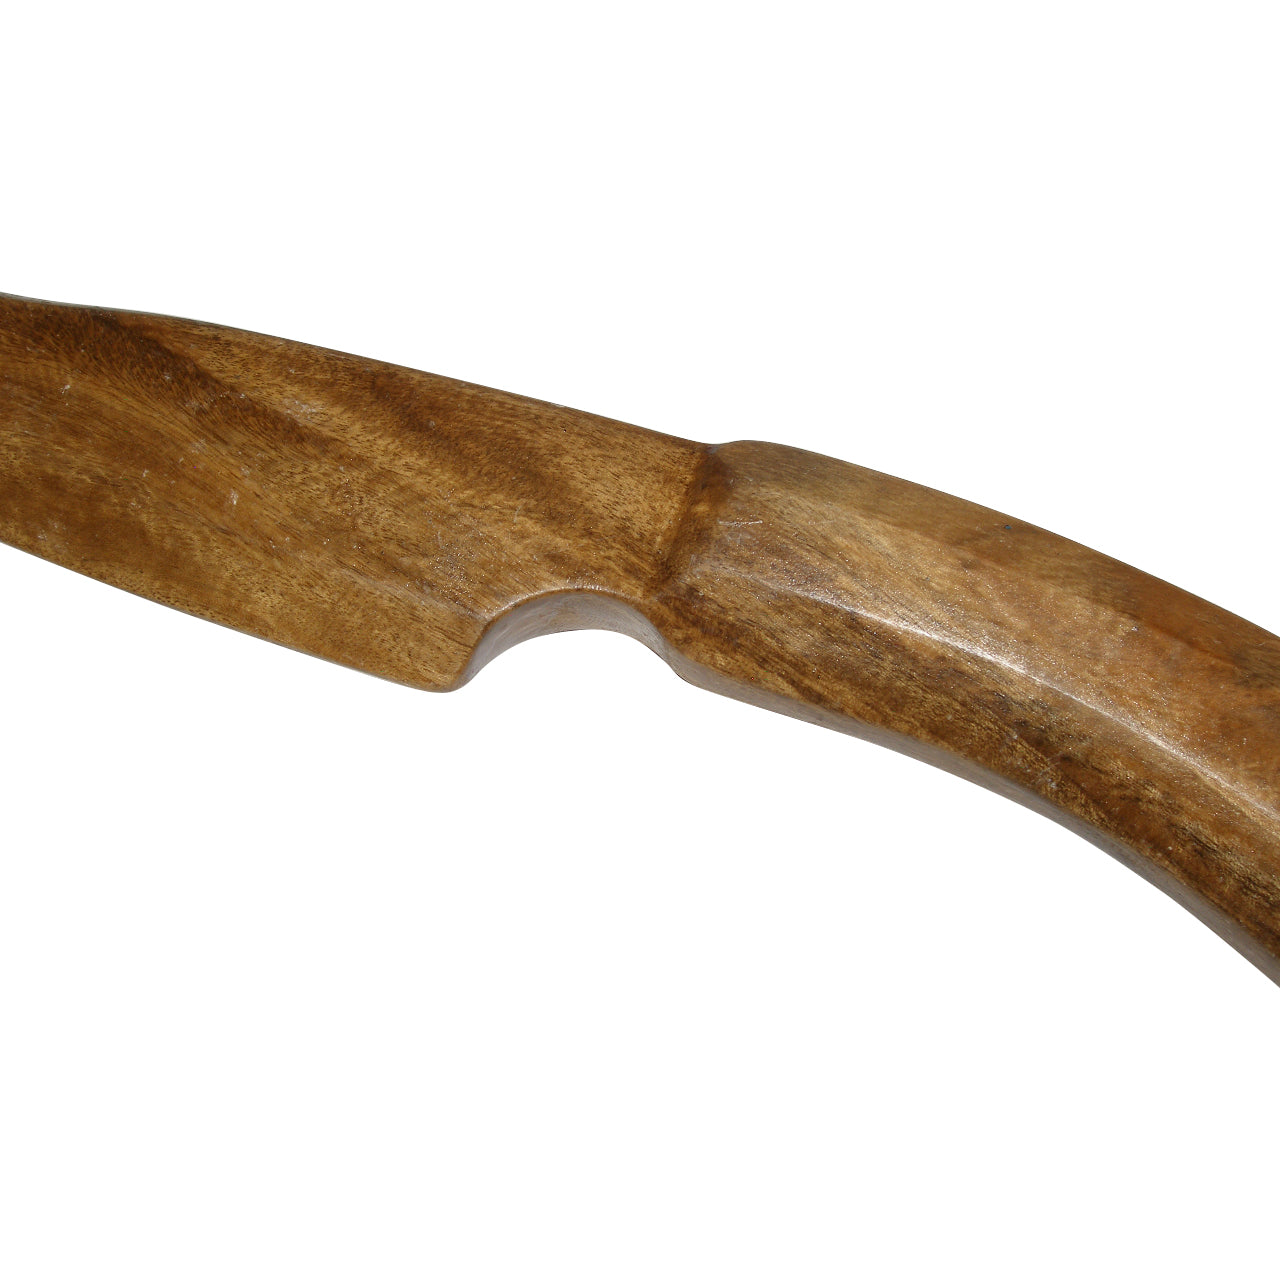 Molave Hardwood Filipino Kali Arnis Escrima Single Edge Practice Knife